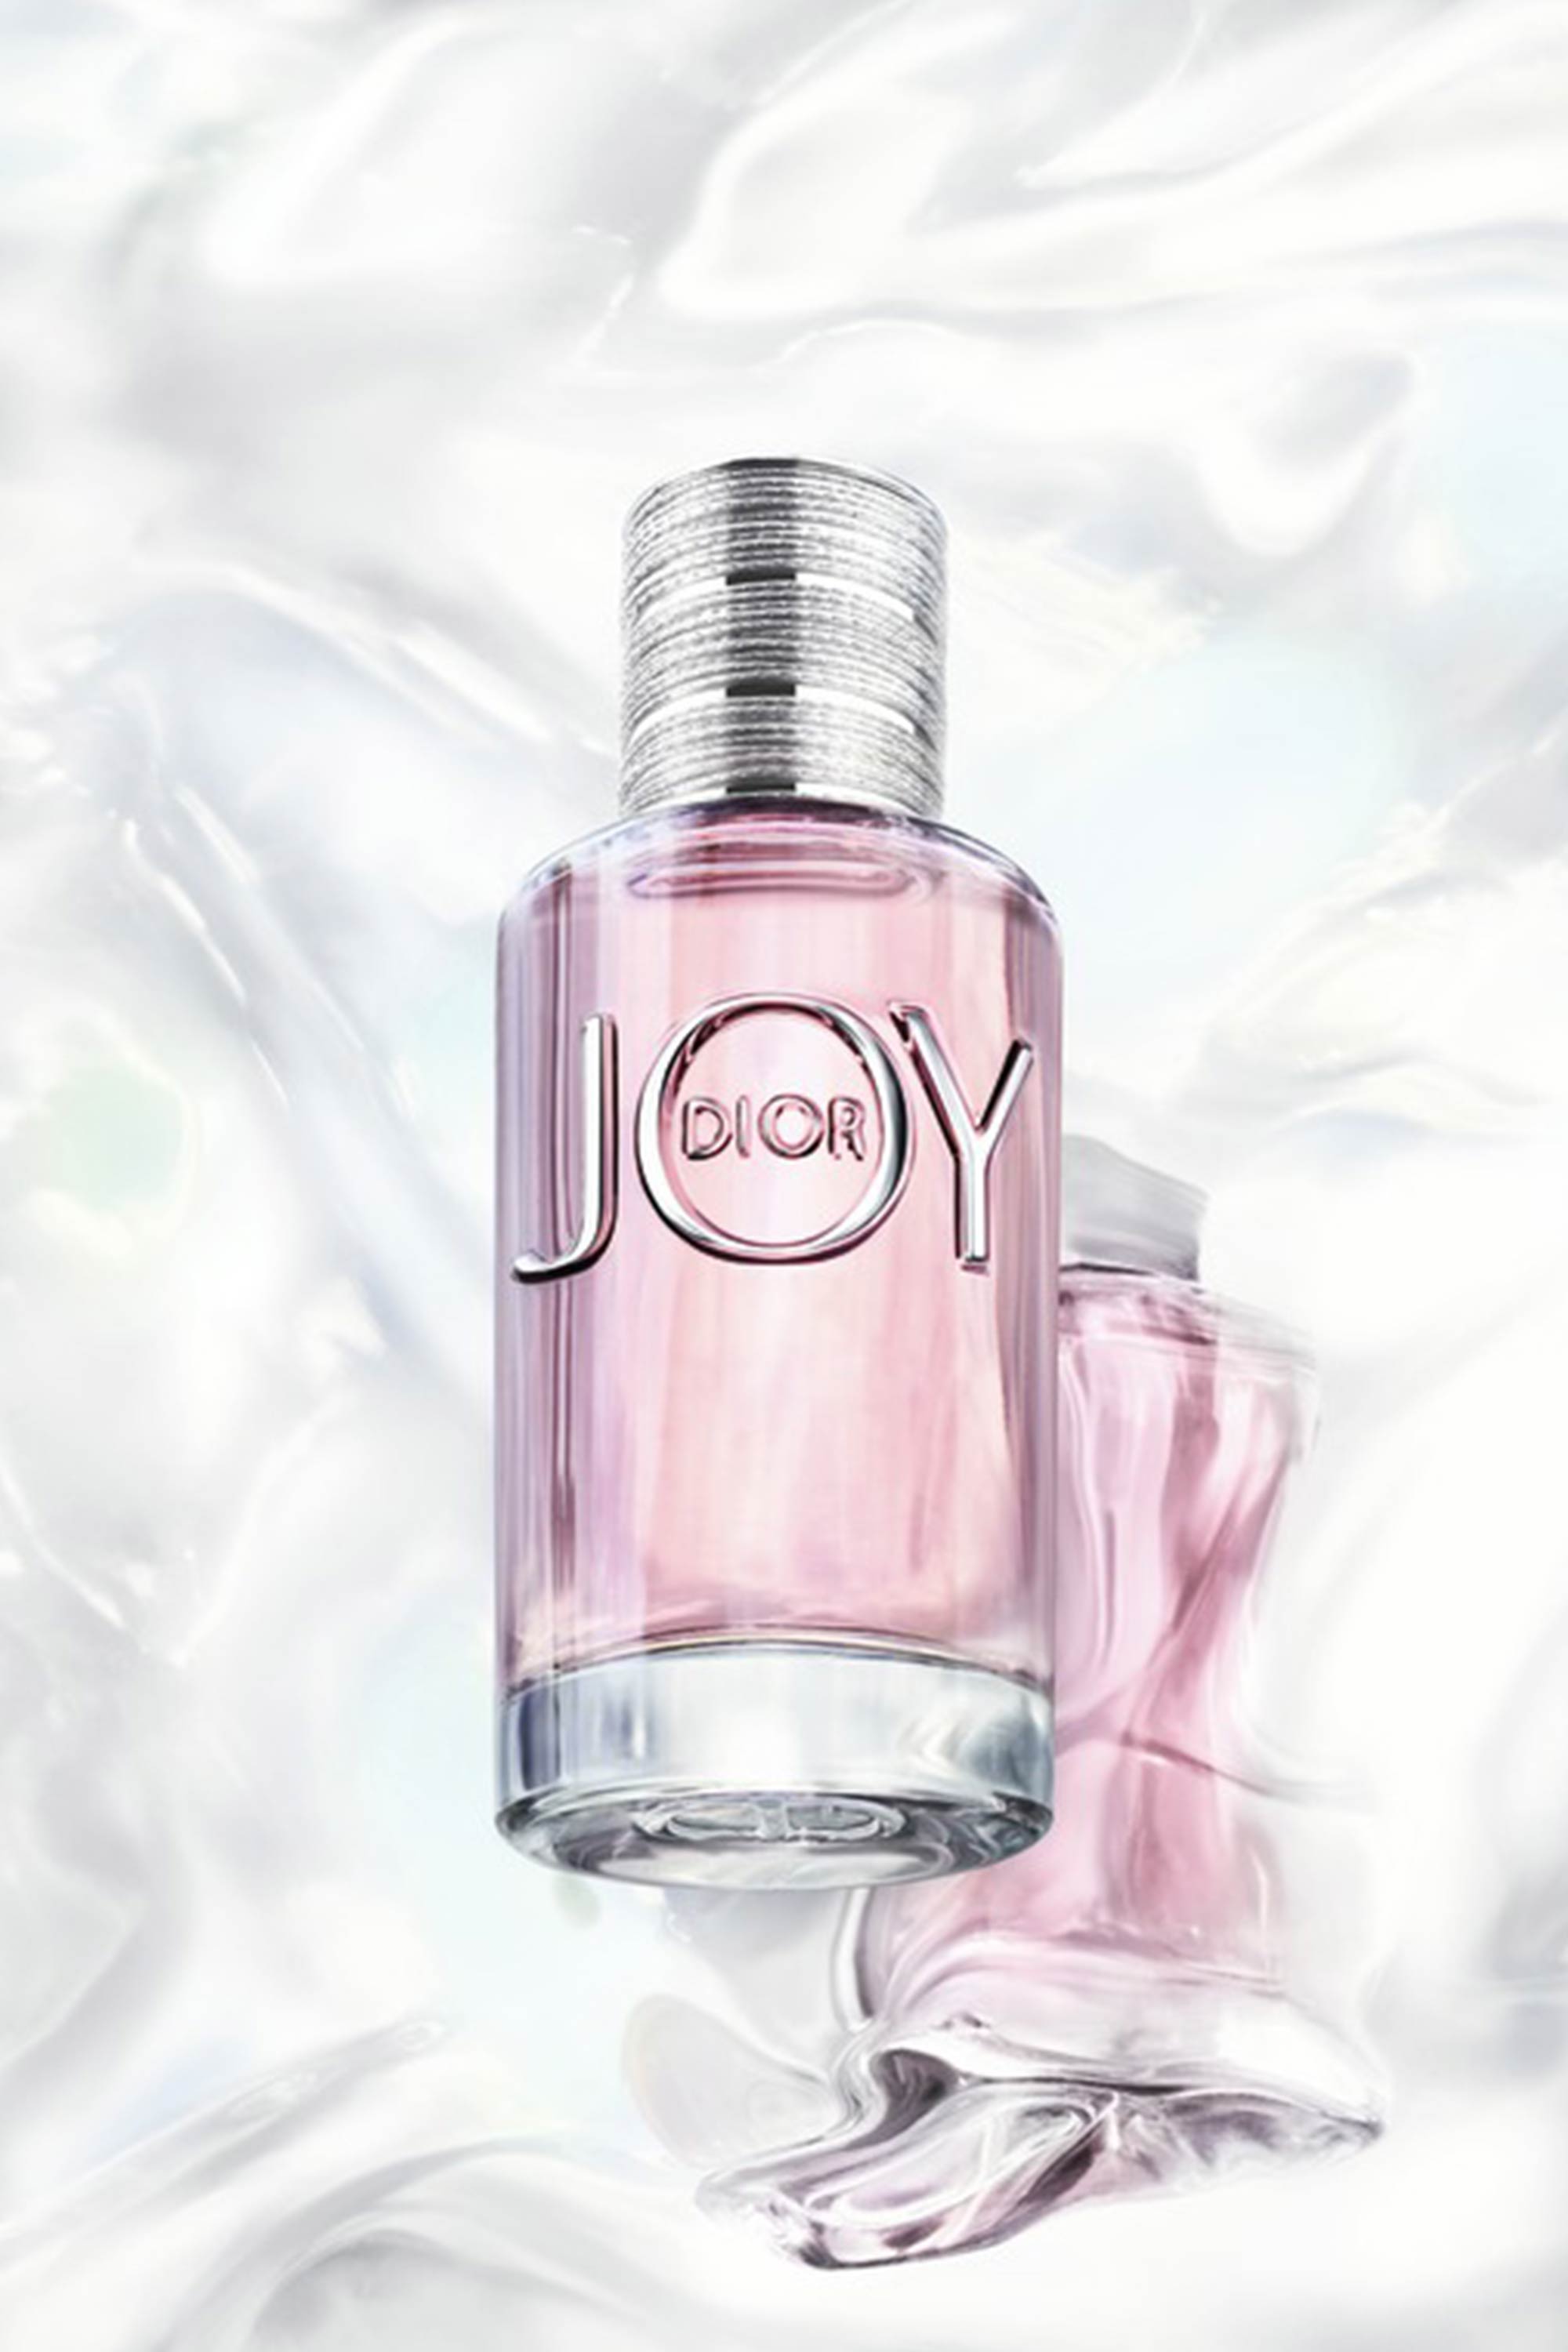 Parfums Christian Dior, fragrances - Perfumes & Cosmetics - LVMH